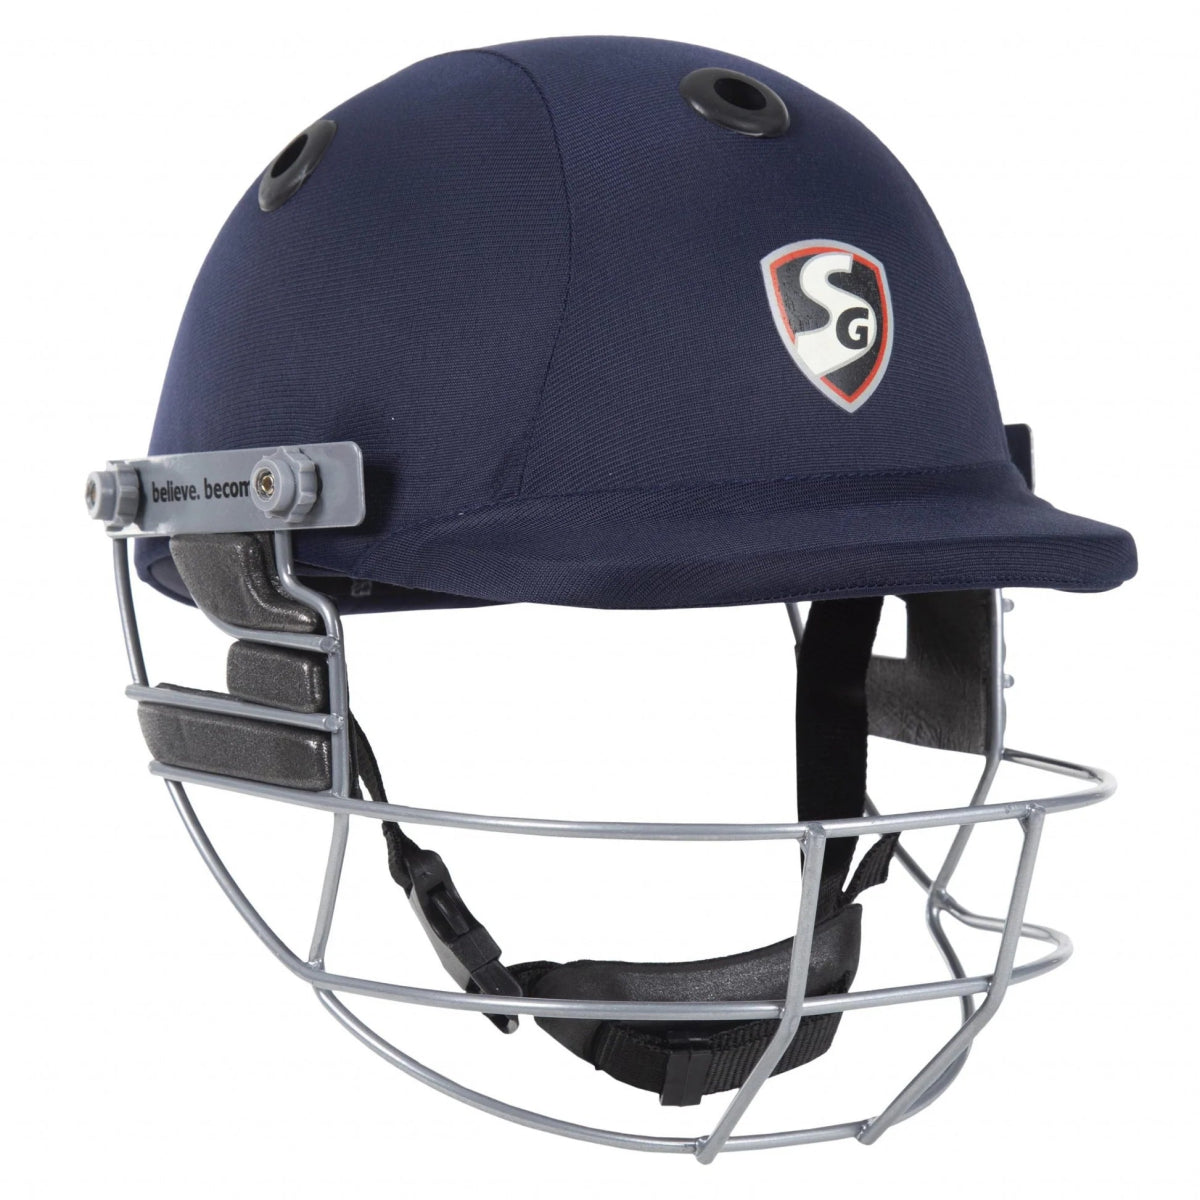 SG Smartech Cricket Helmet - Acrux Sports